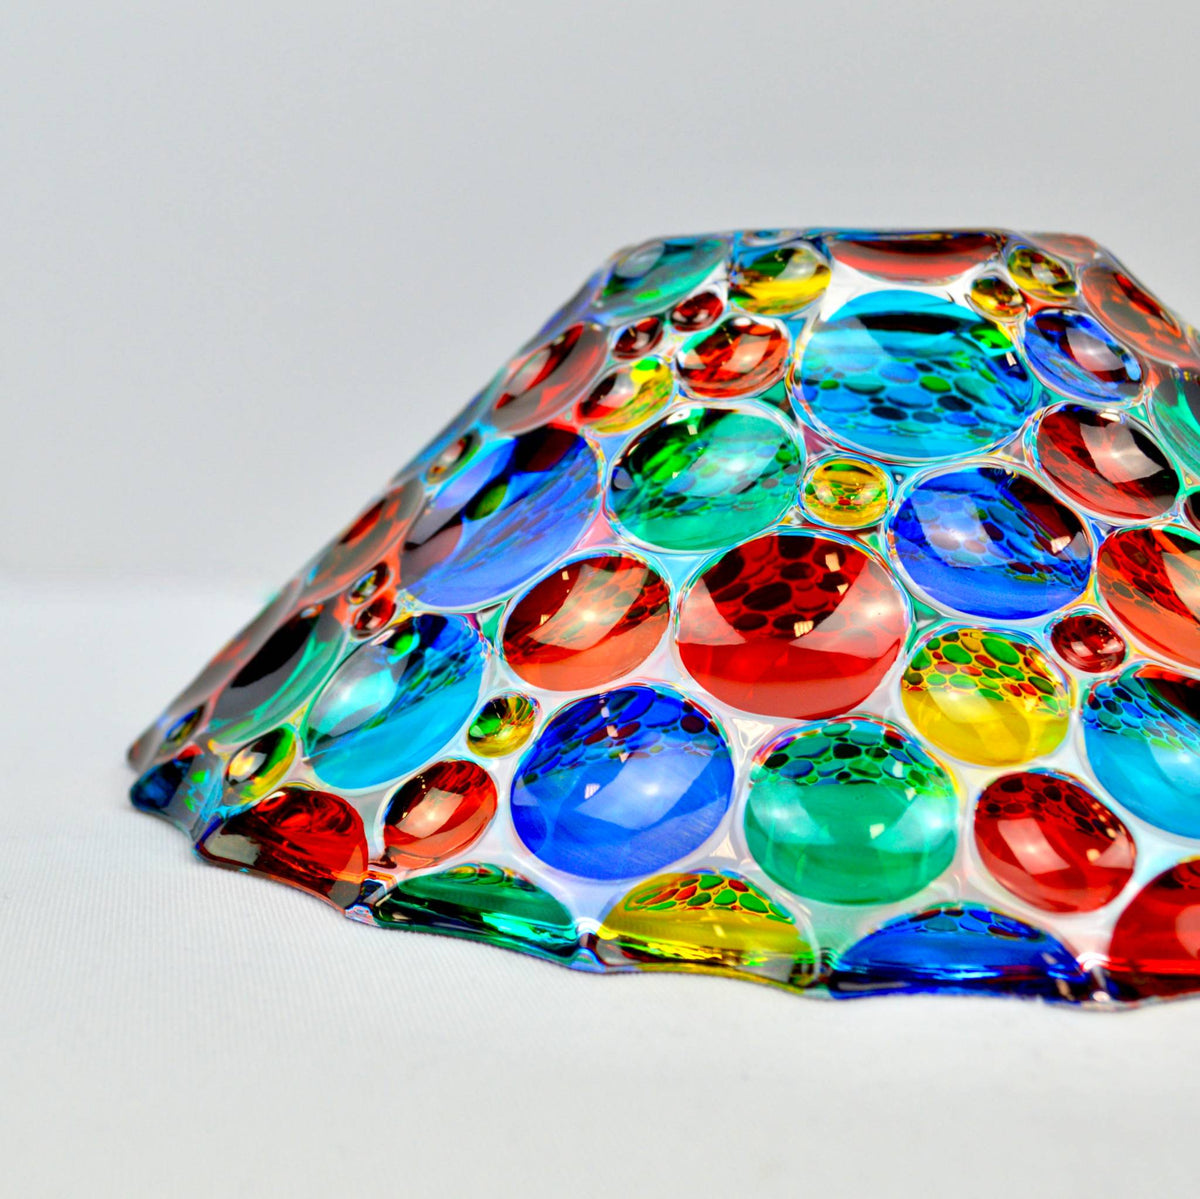 Lisboa Decorative Deep Round Glass Bowl, Hand-Painted, Made In Italy - My Italian Decor